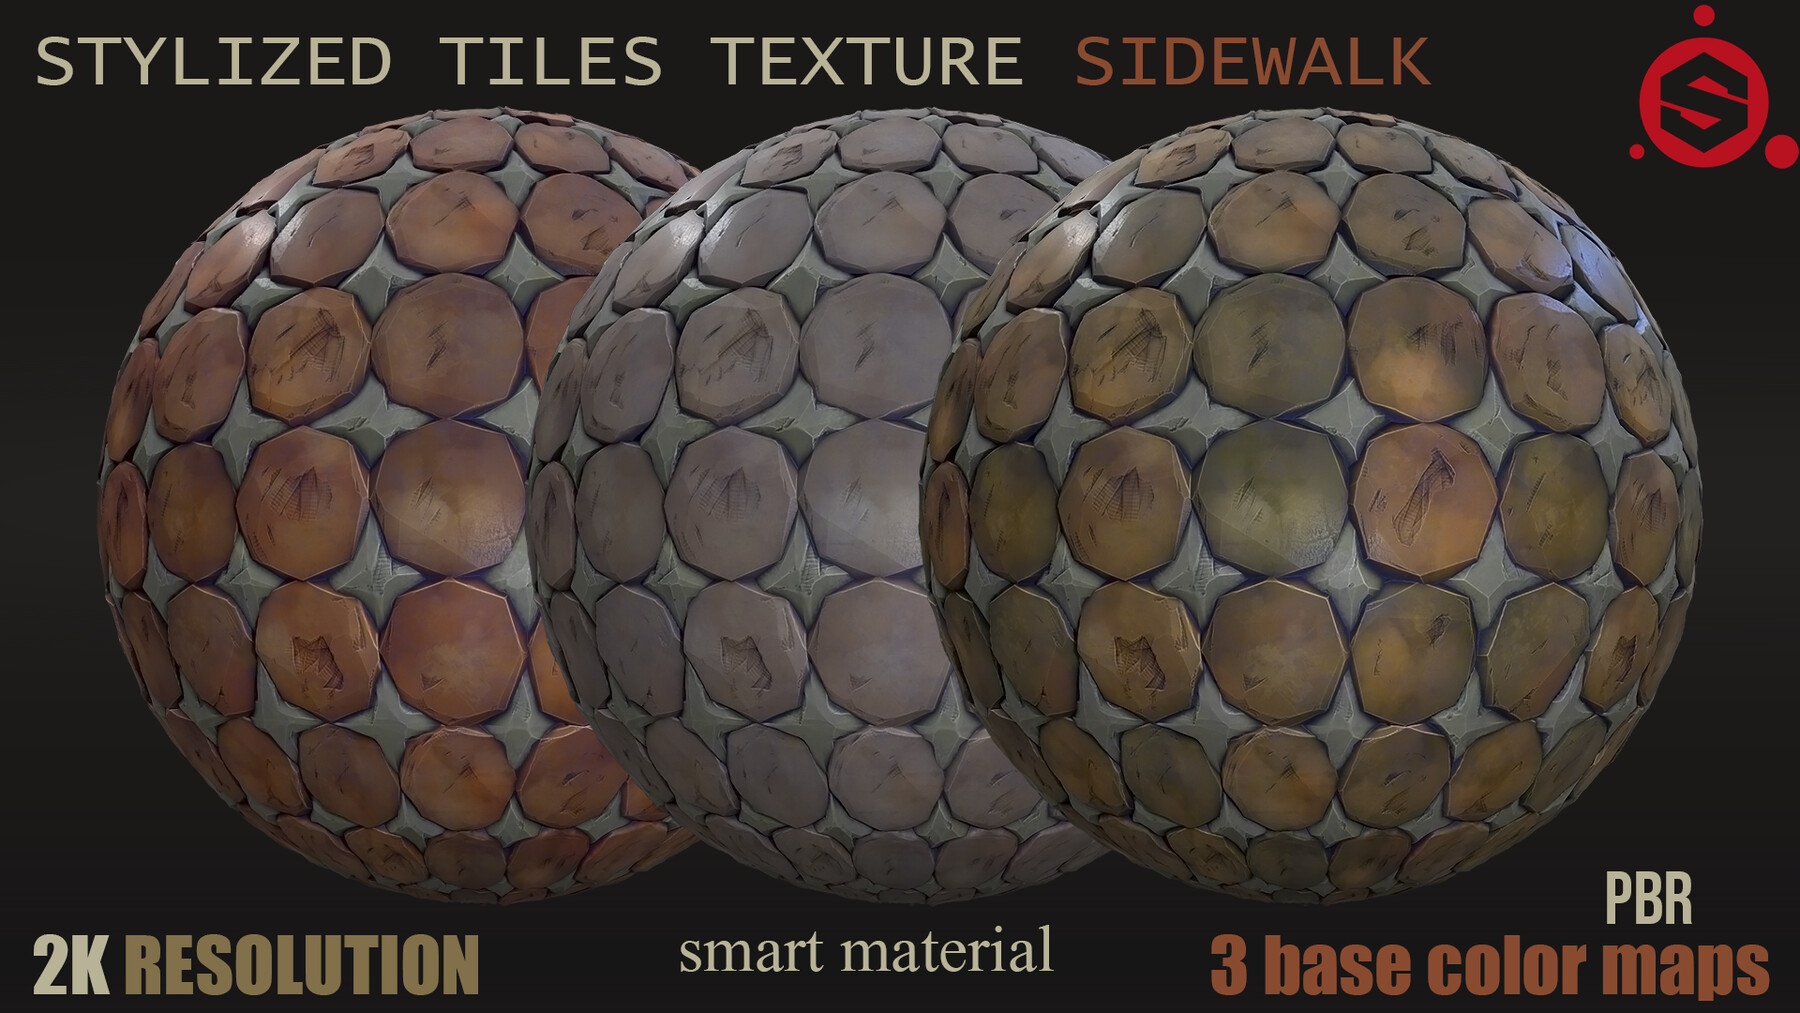 ArtStation - Stylized Tiles Texture SIDEWALK | Brushes